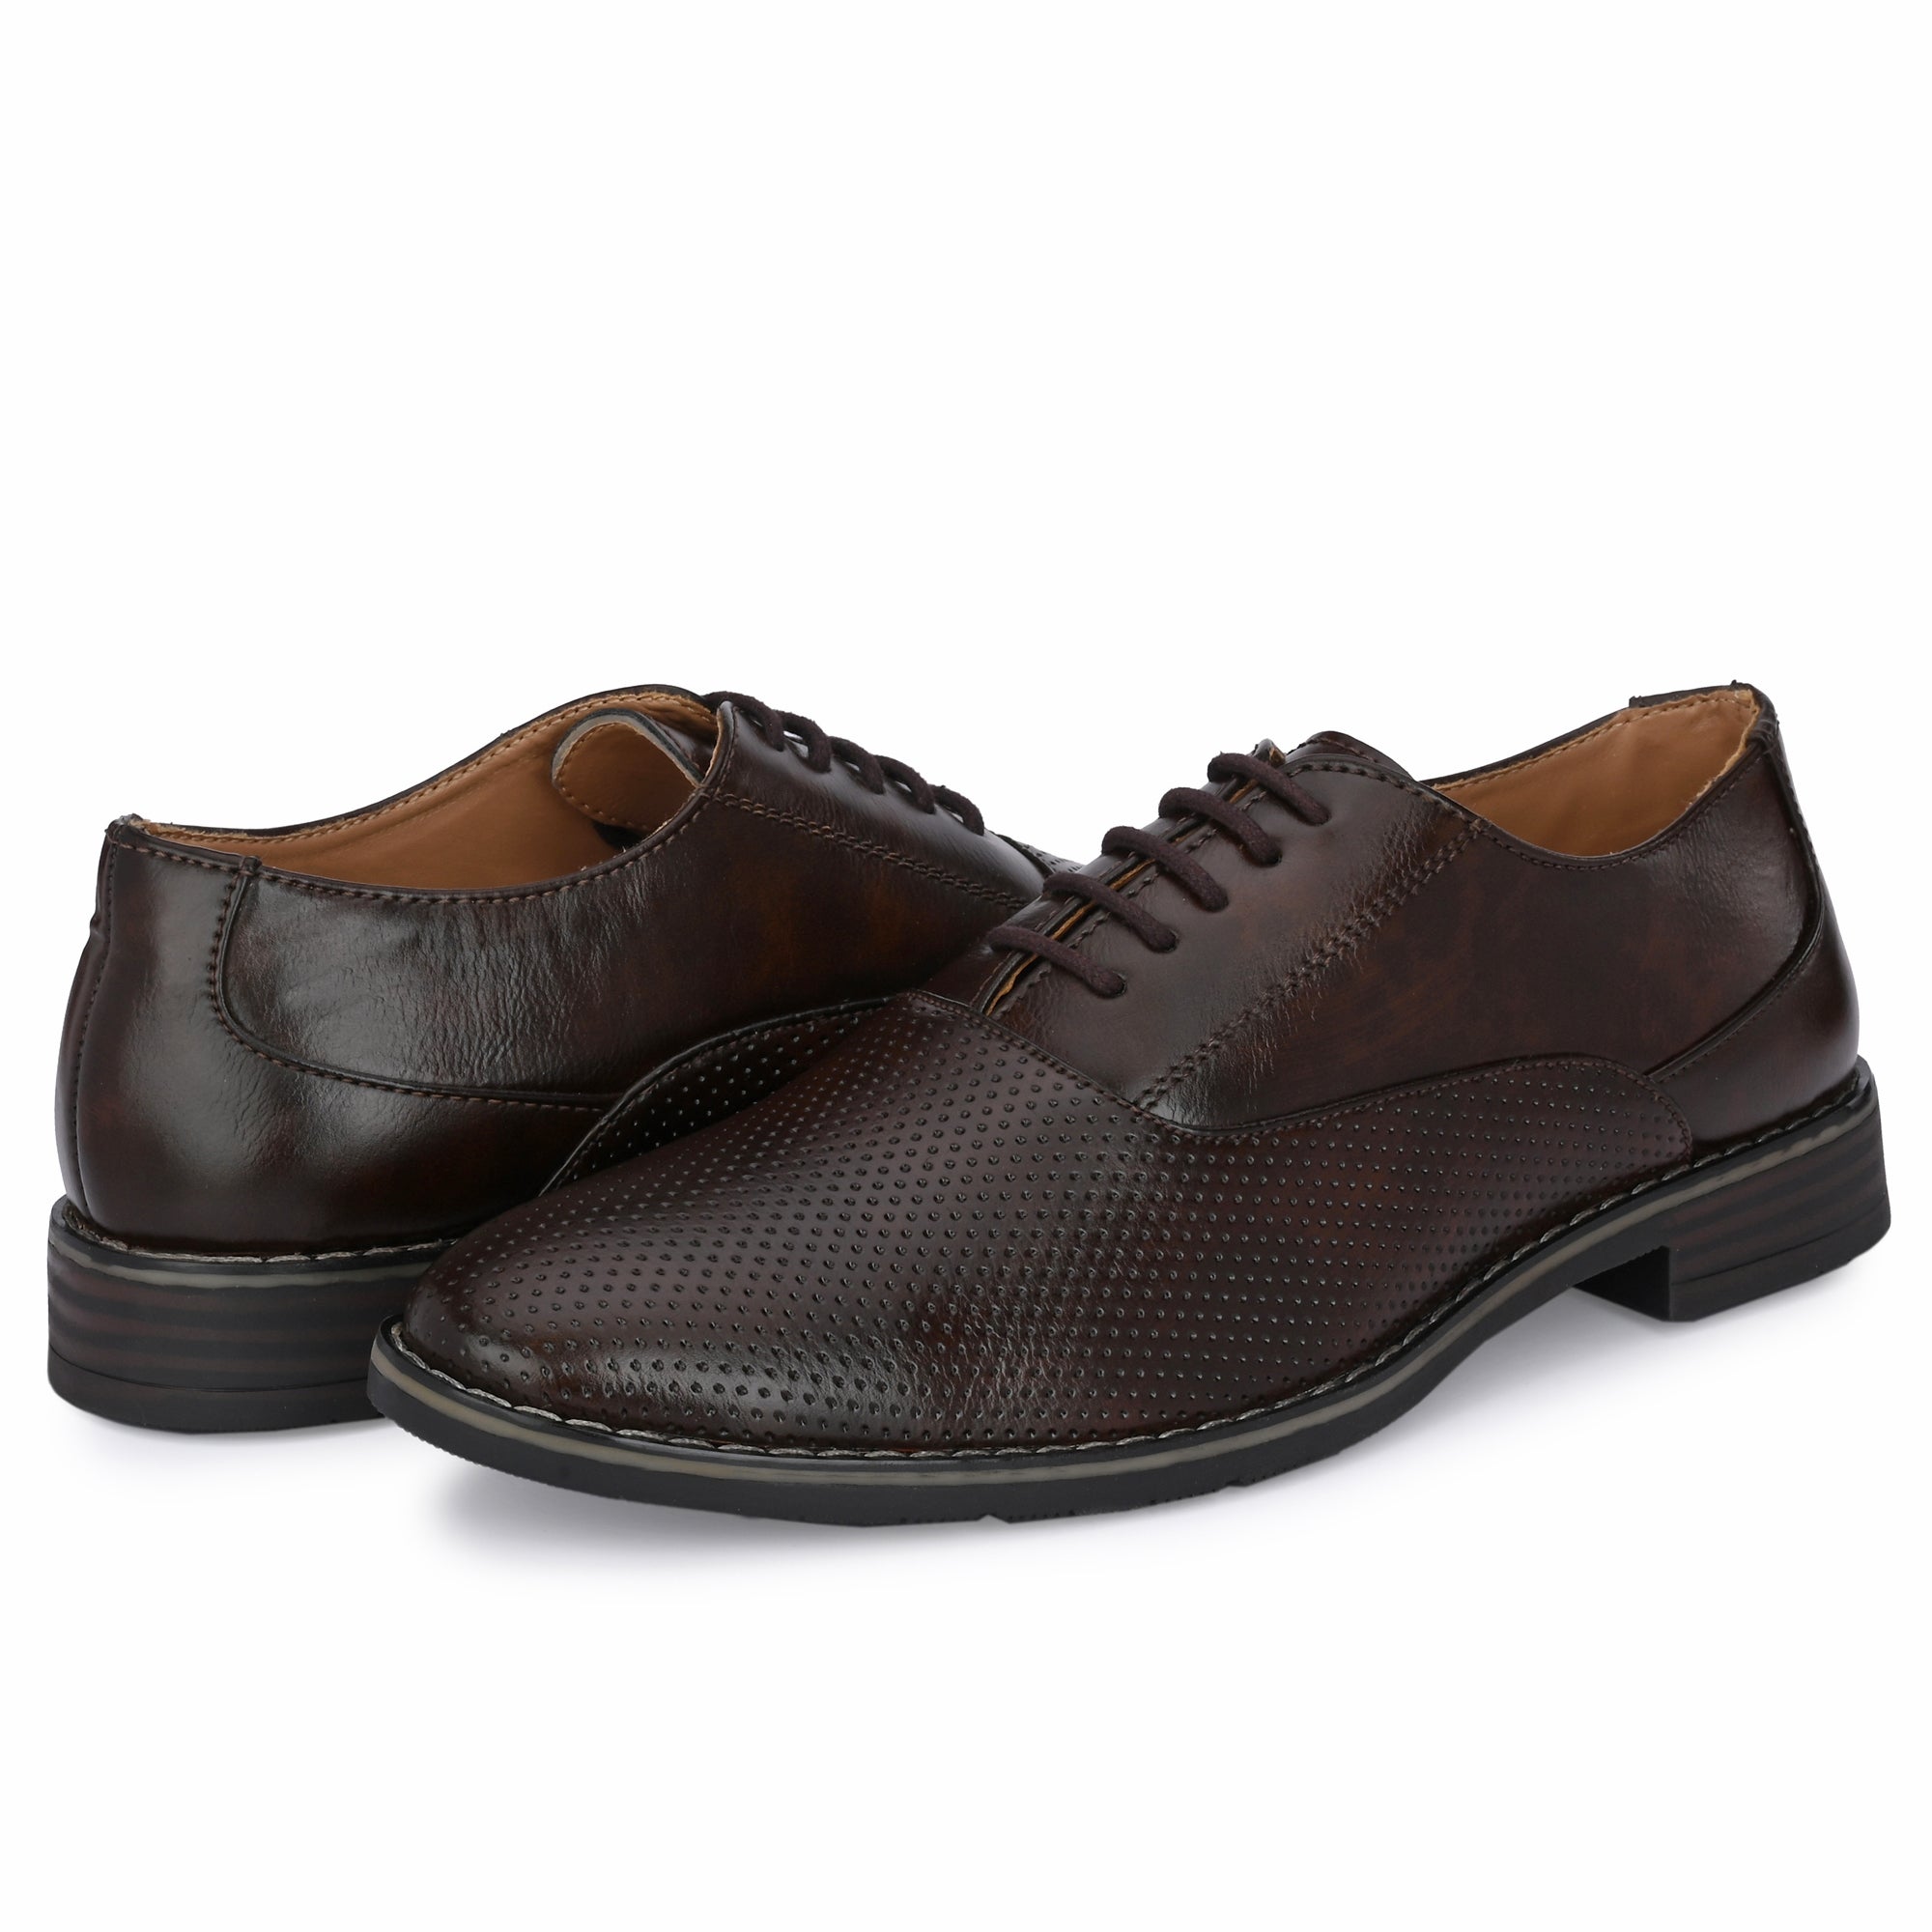 black-formal-lace-up-attitudist-shoes-for-men-with-design-sp10a